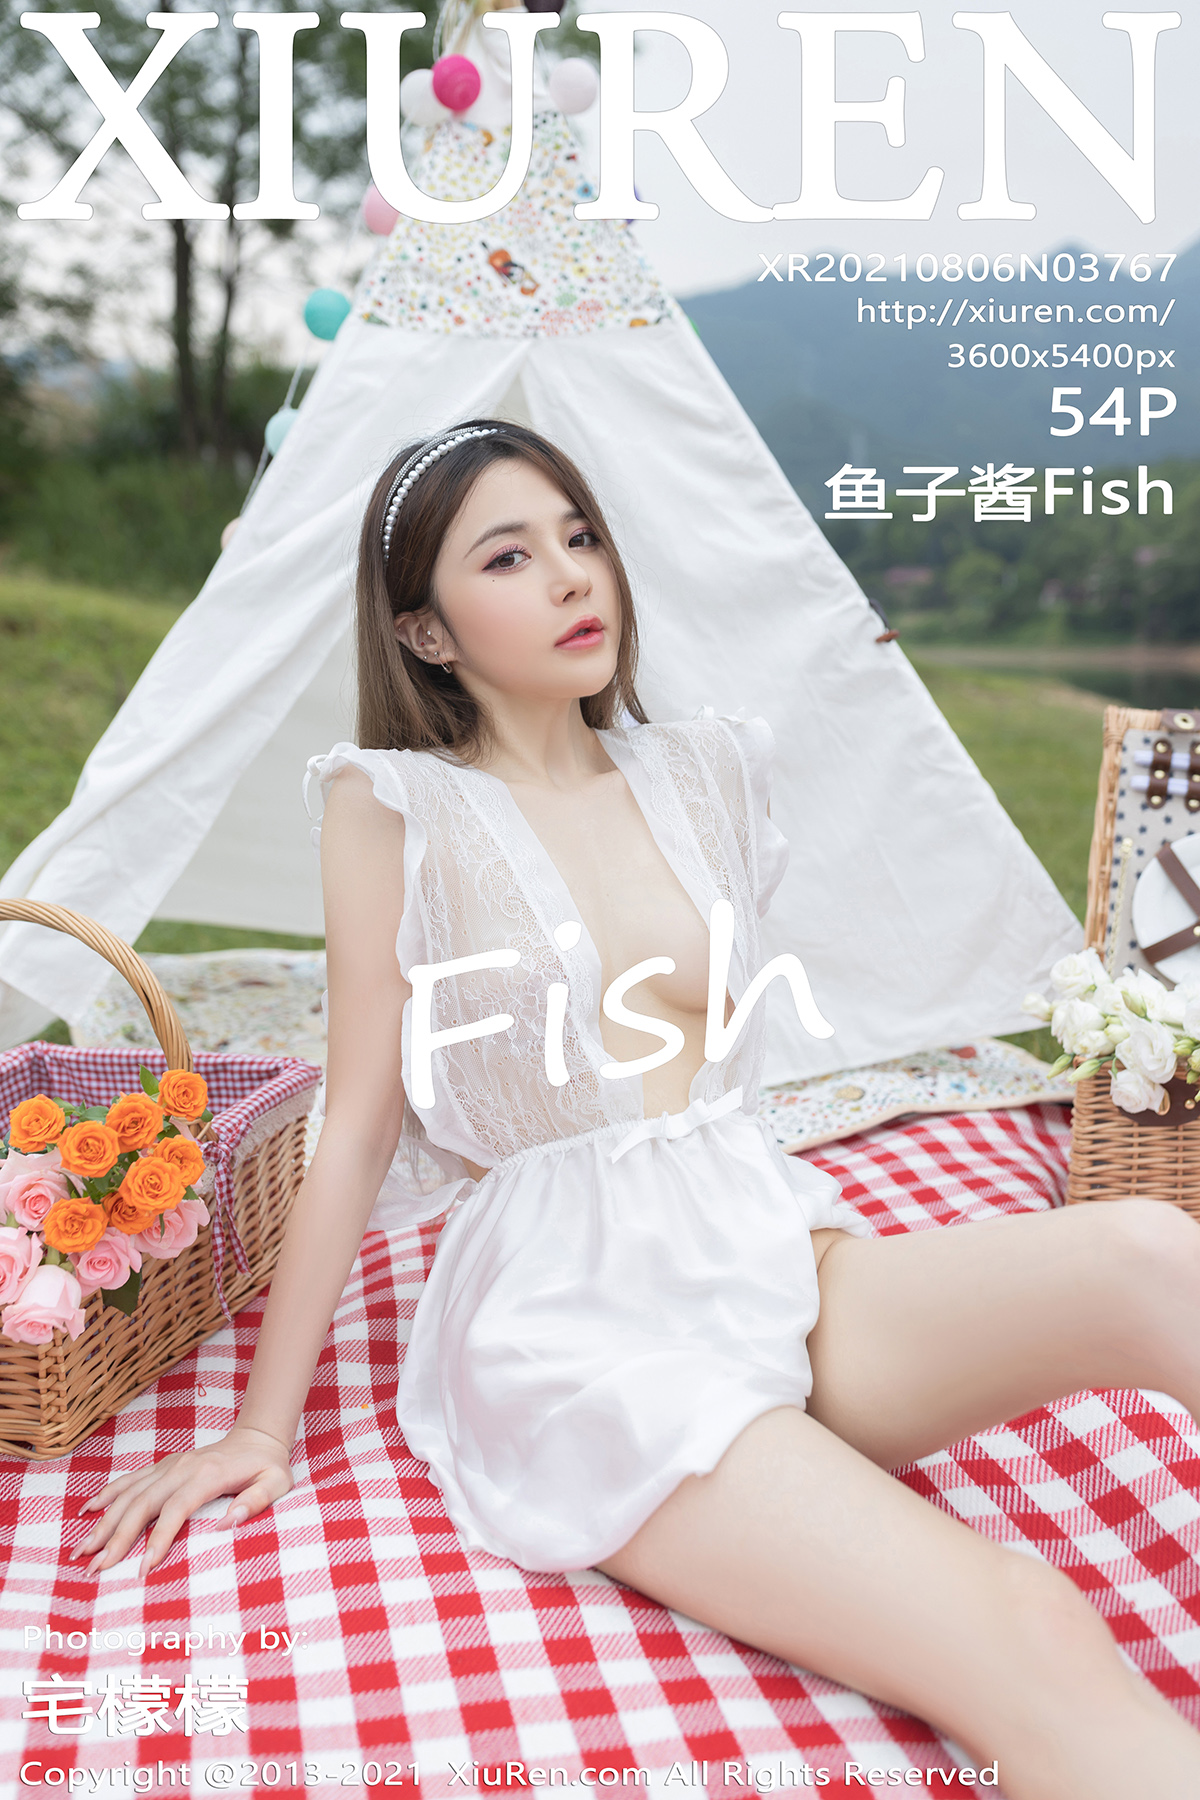 [XiuRen秀人網] 2021.08.06 No.3767 魚子醬Fish 湖畔野餐主題系列 [54P] - 貼圖 - 清涼寫真 -